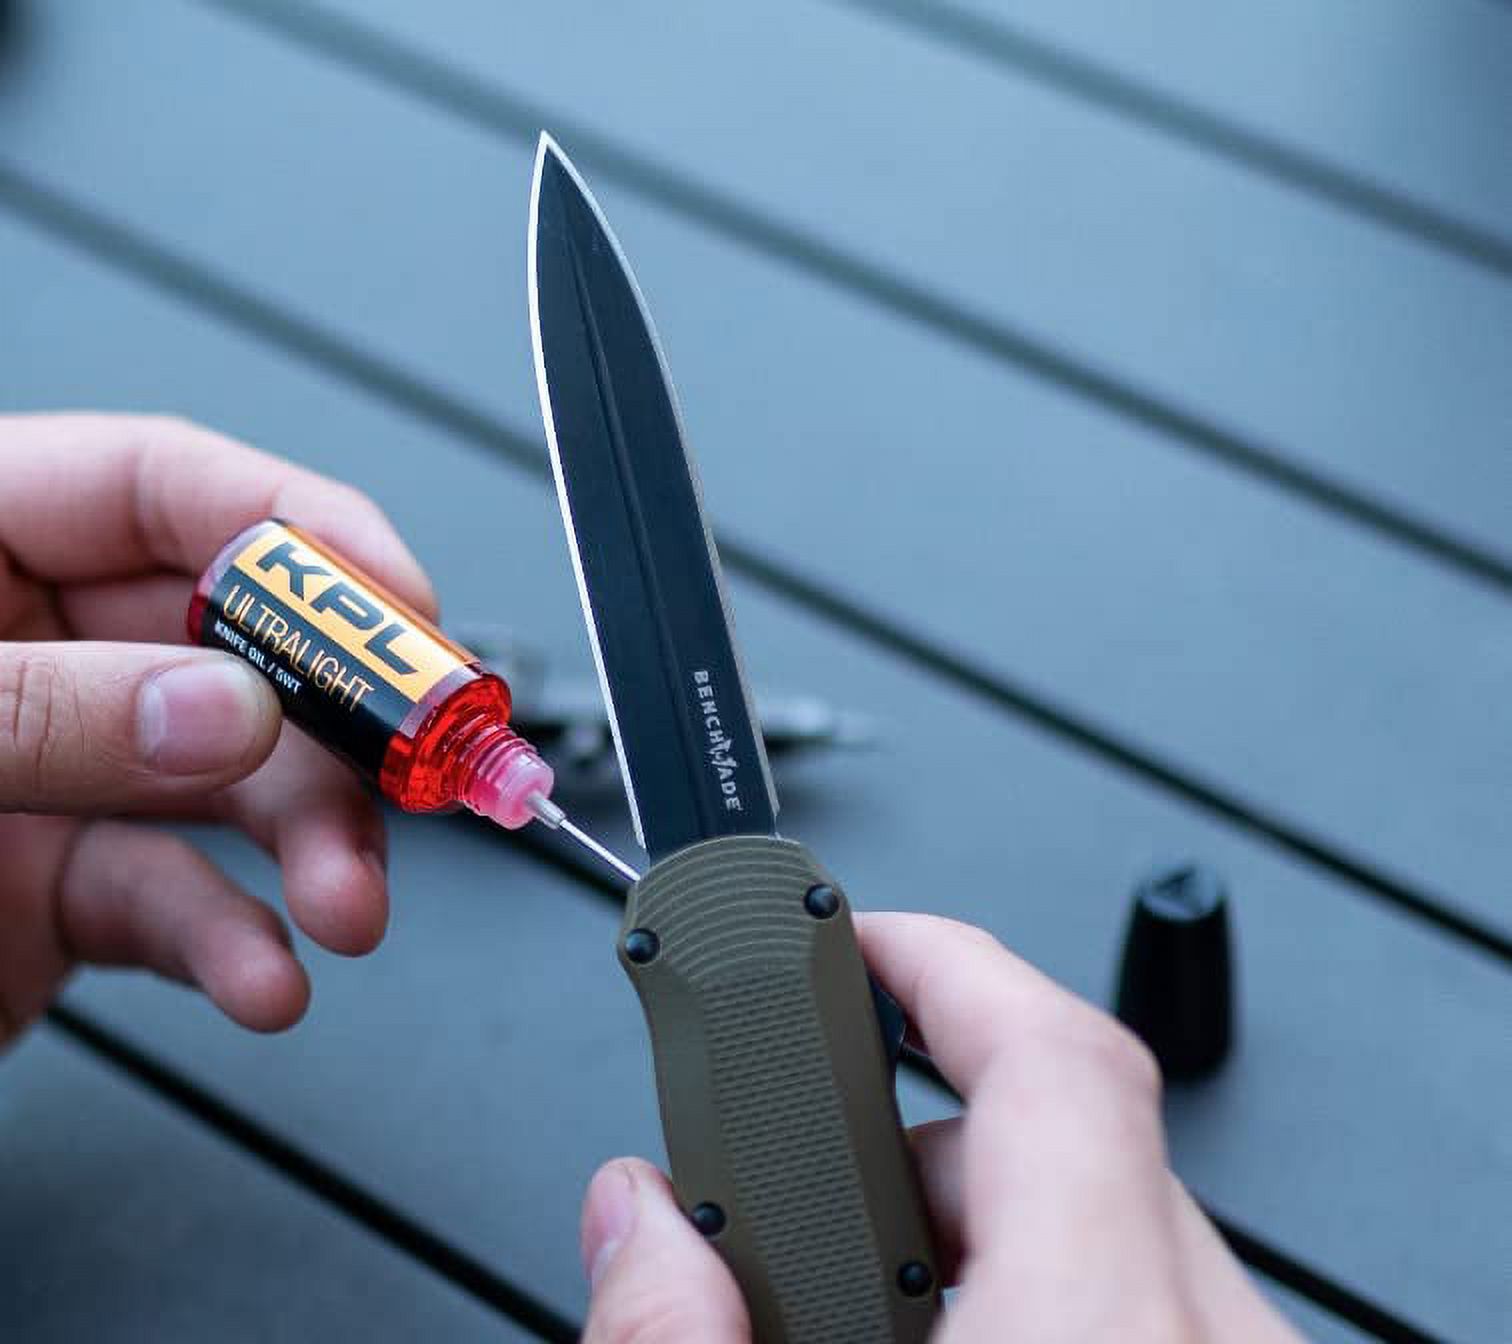 Knife Pivot Lube Kplult Ultra Light Knife Oil, Size: One Size